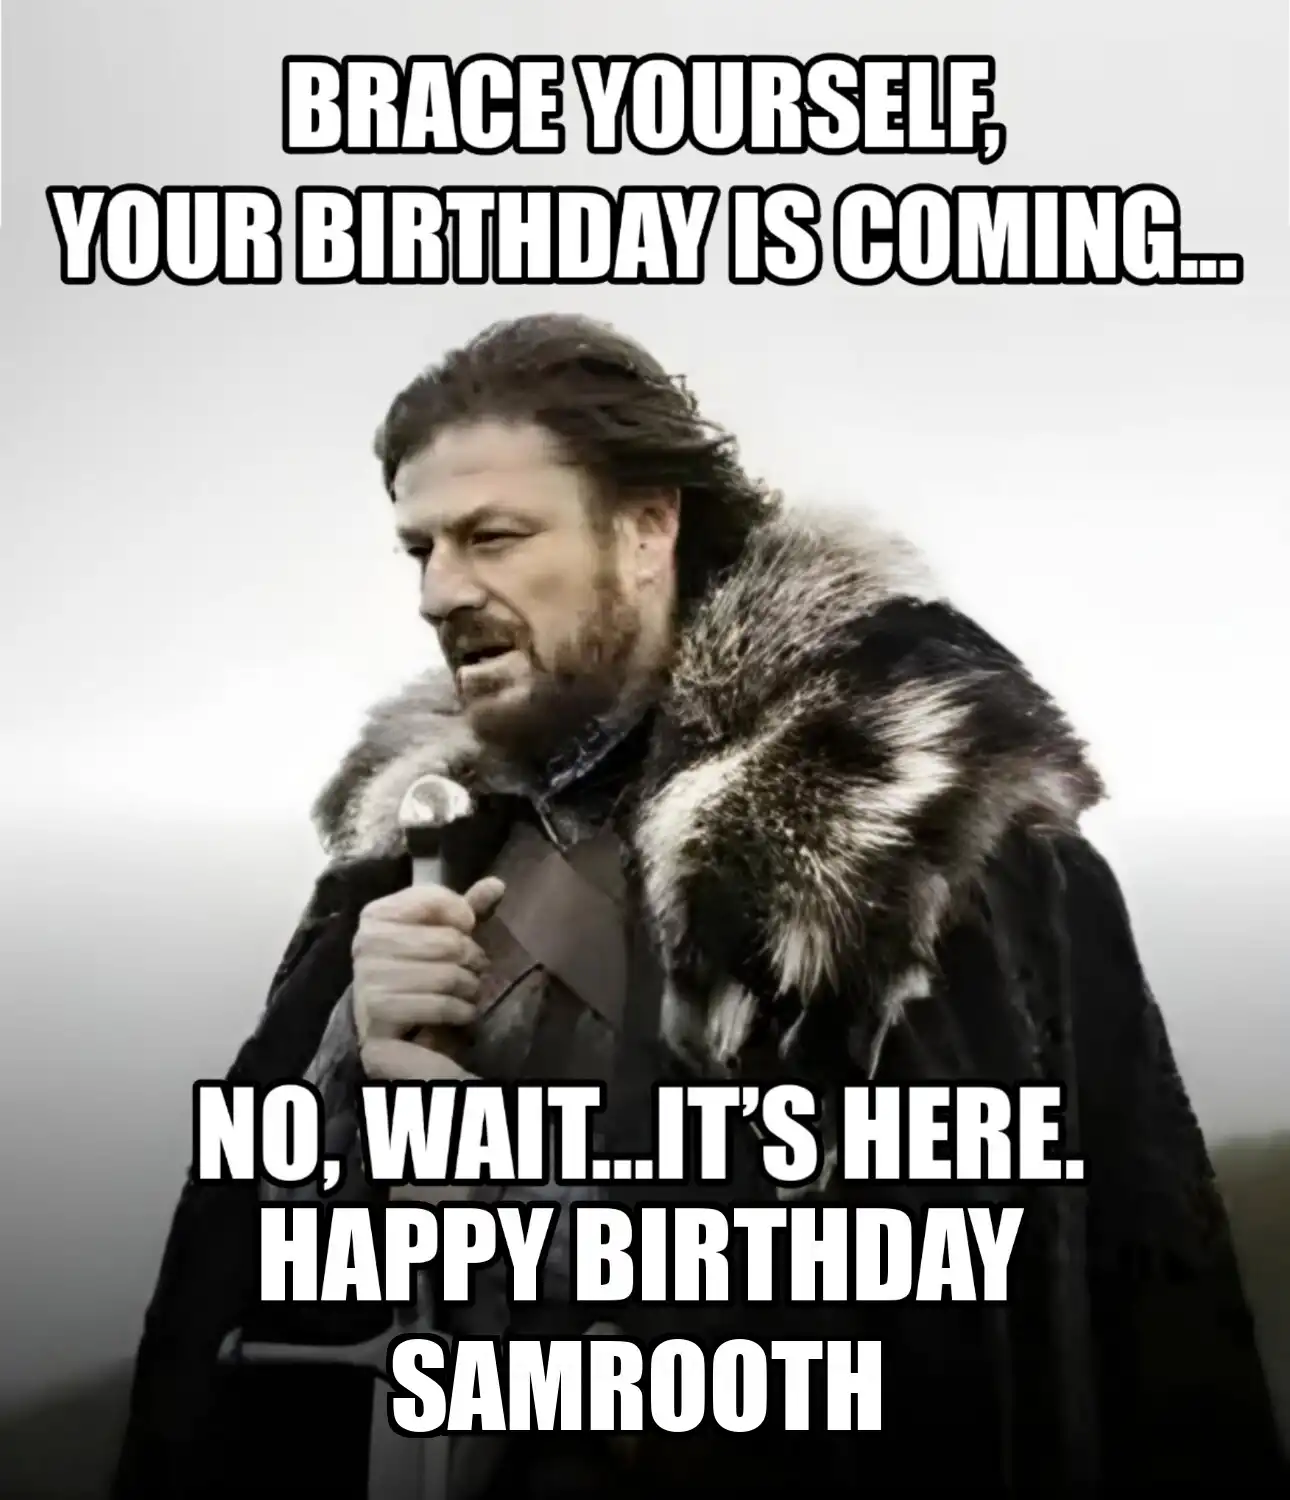 Happy Birthday Samrooth Brace Yourself Your Birthday Is Coming Meme